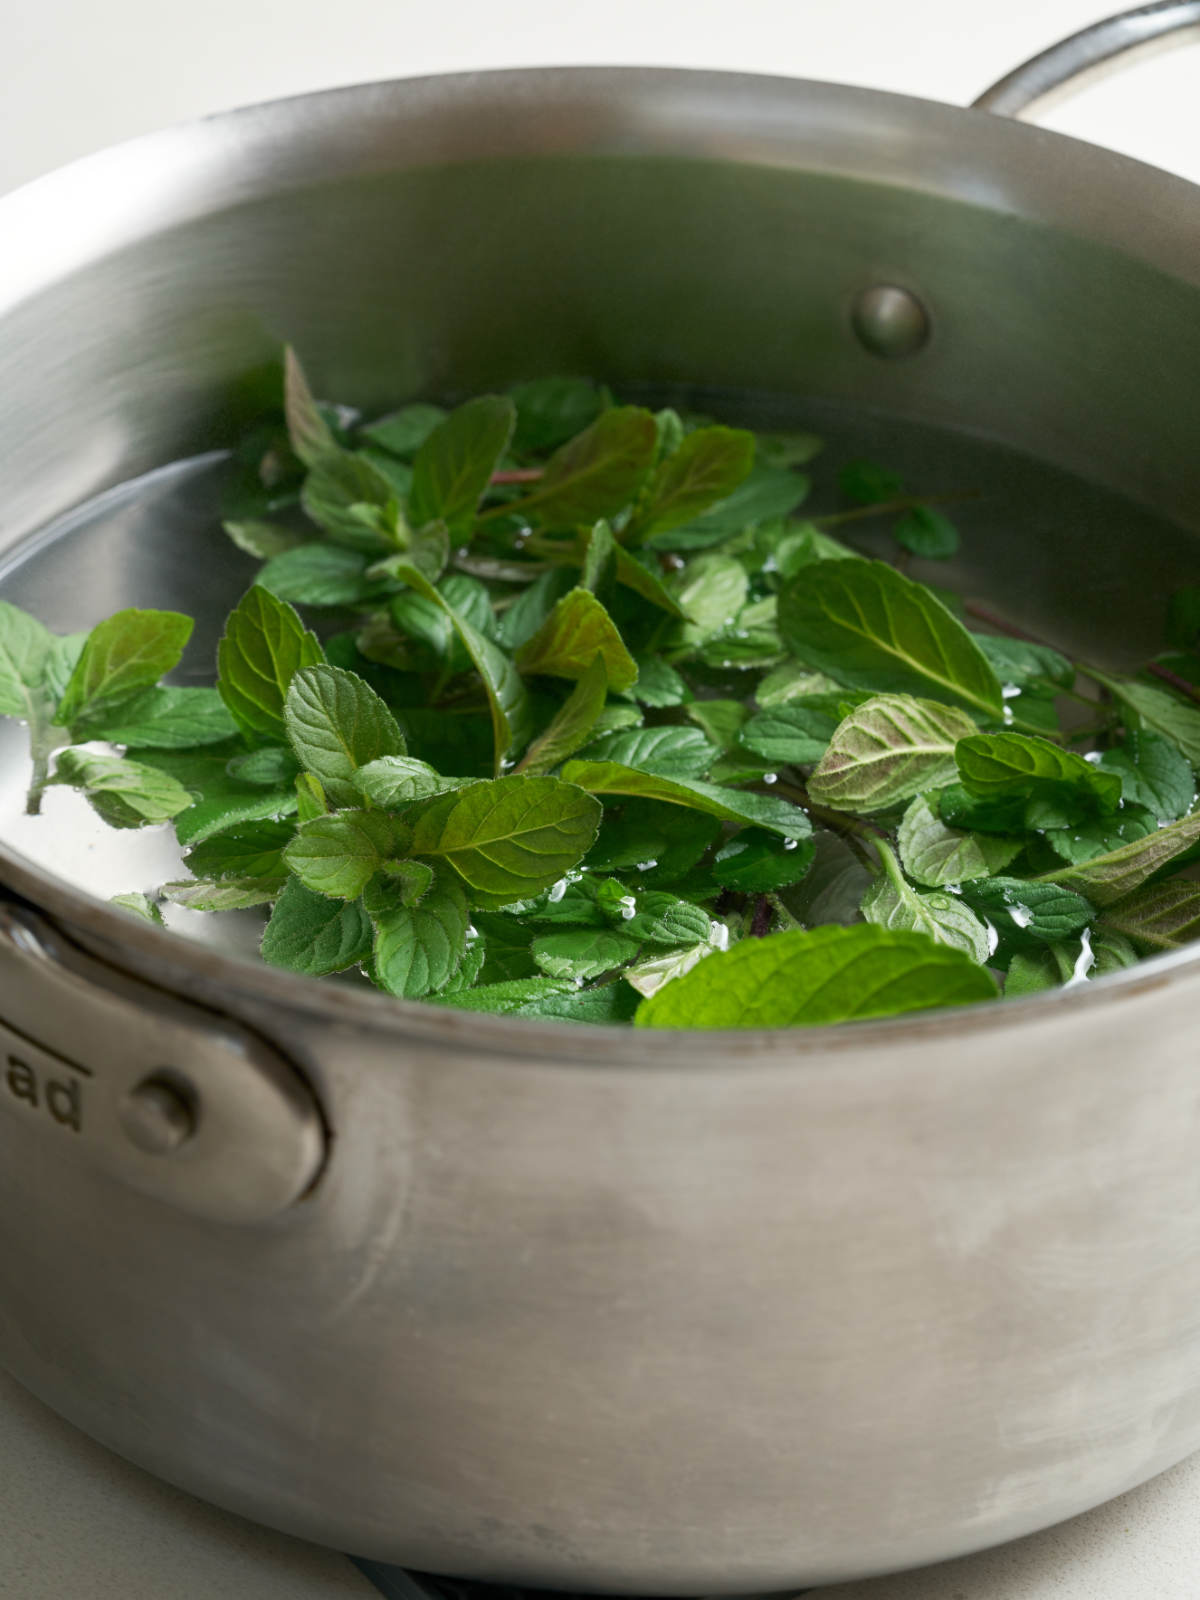 Mint leaves in water in a saucepan.